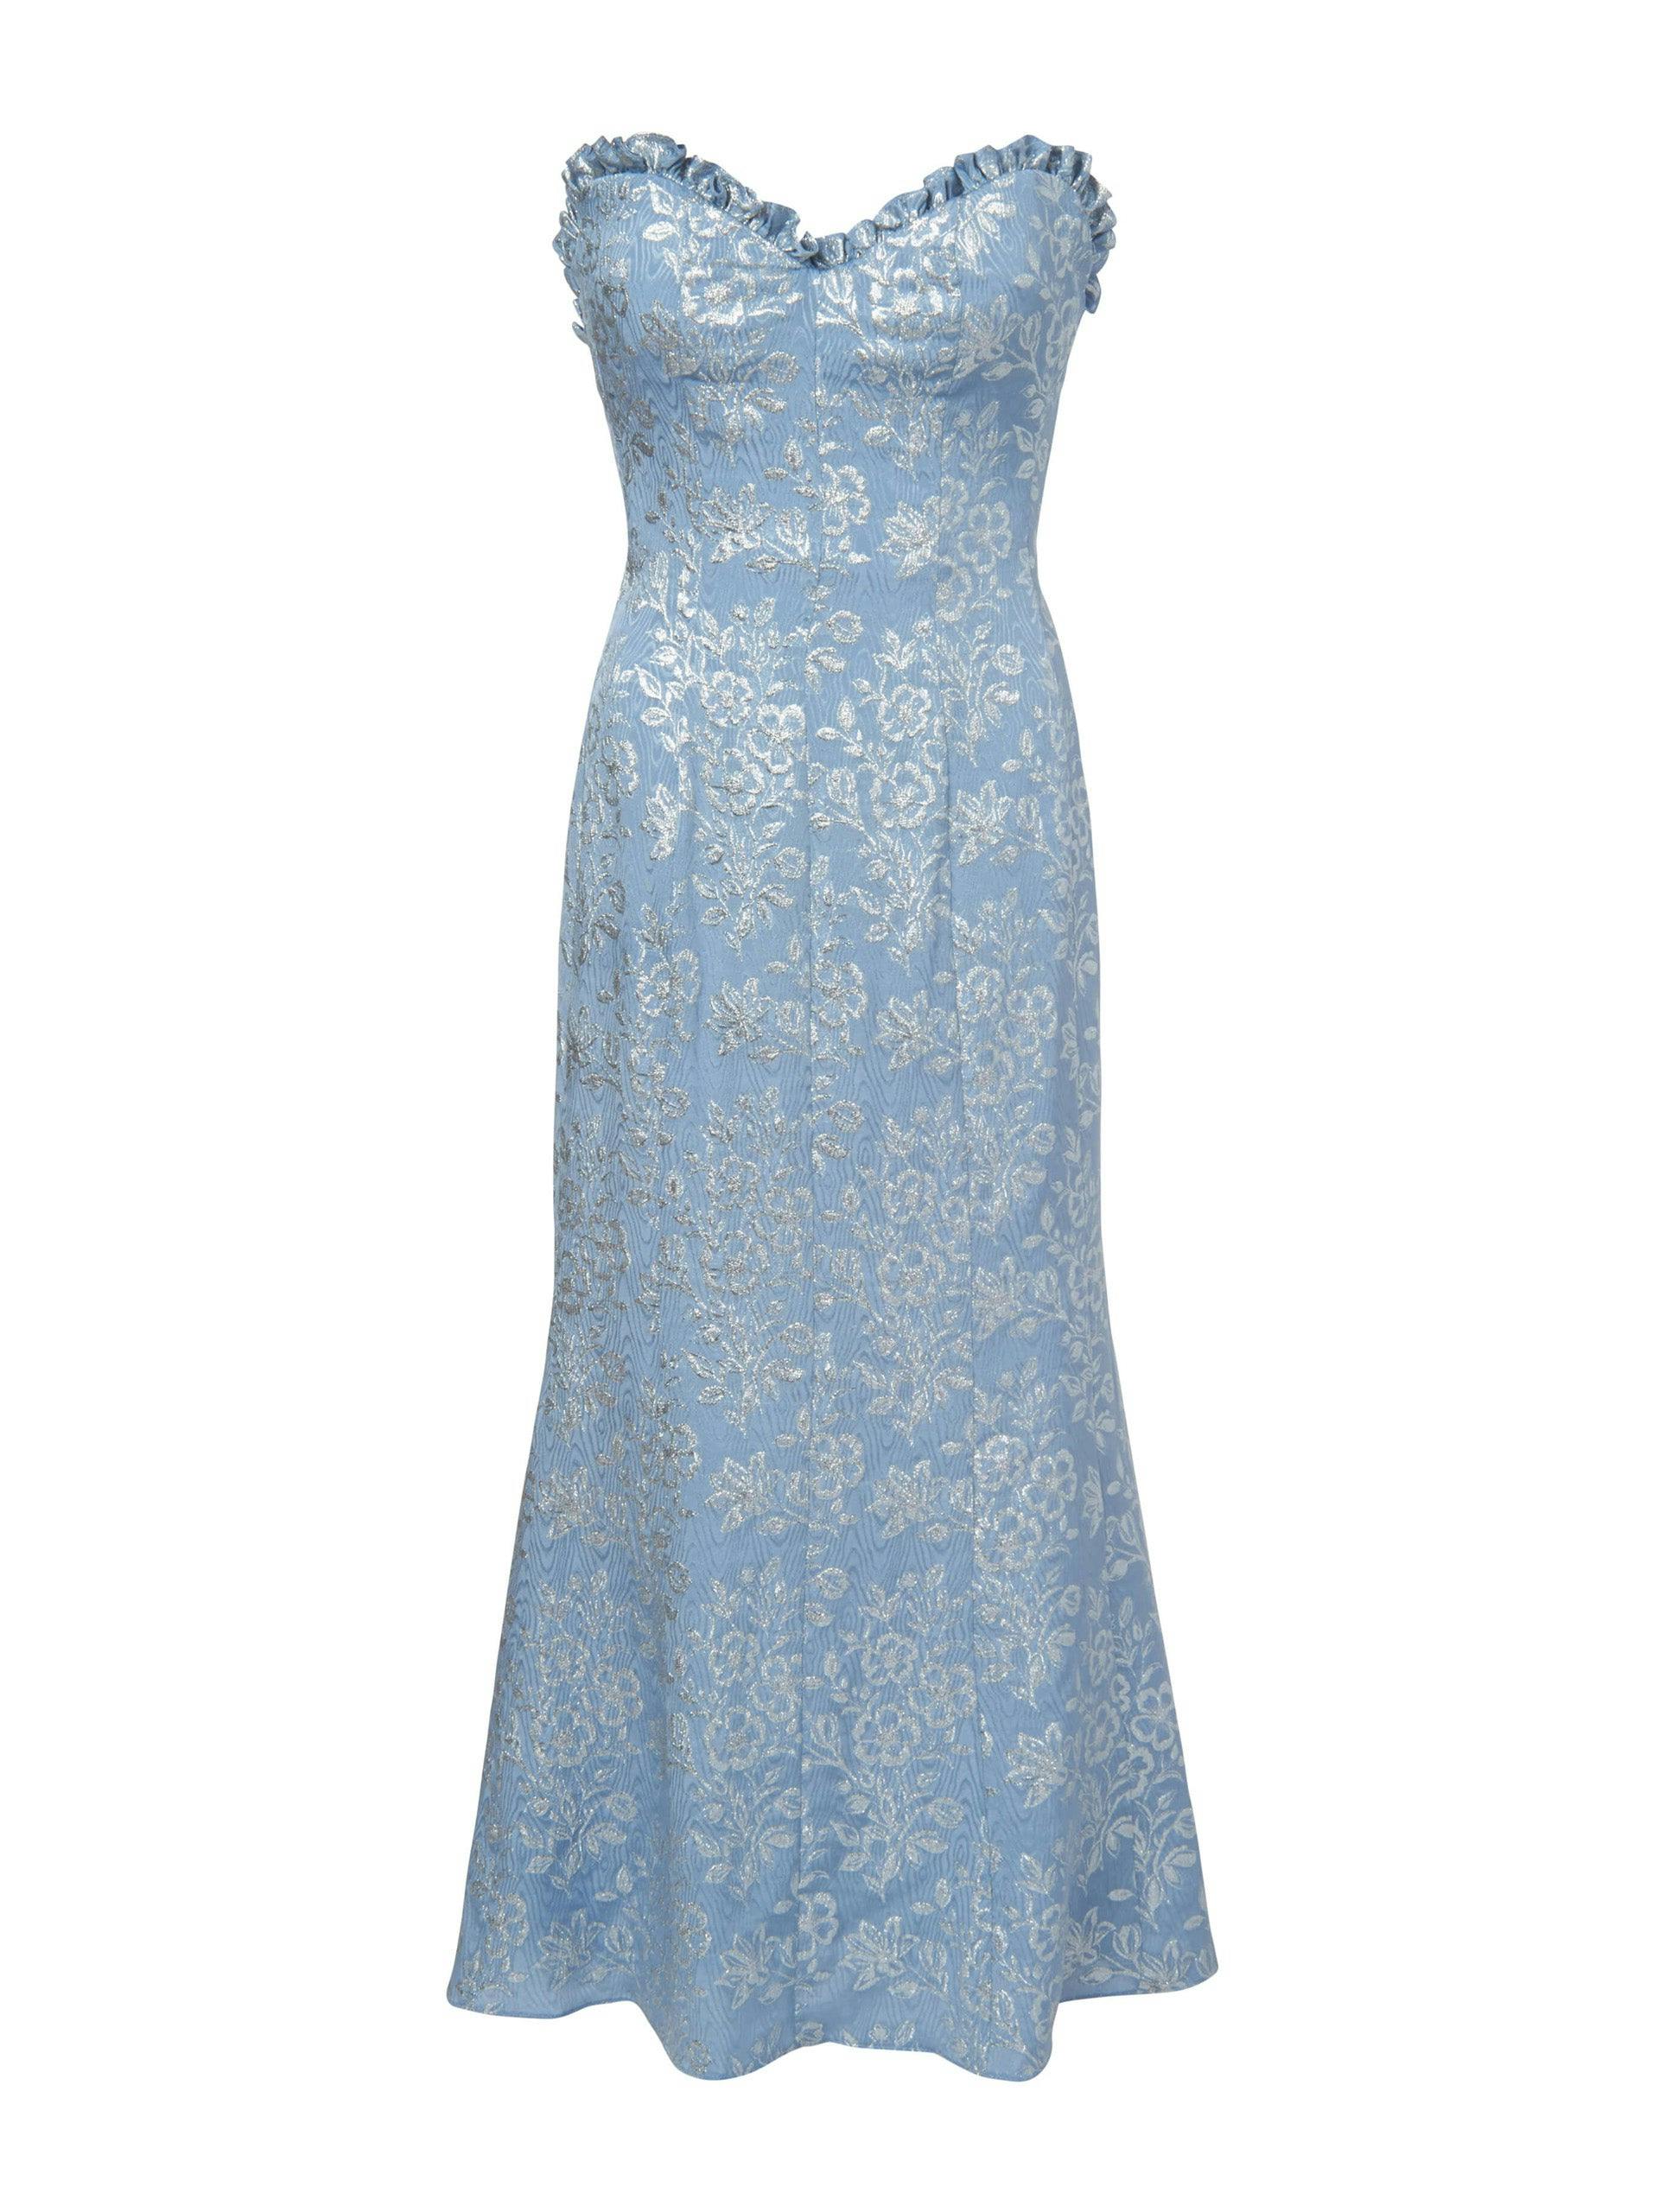 Odelina blue metallic floral strapless dress